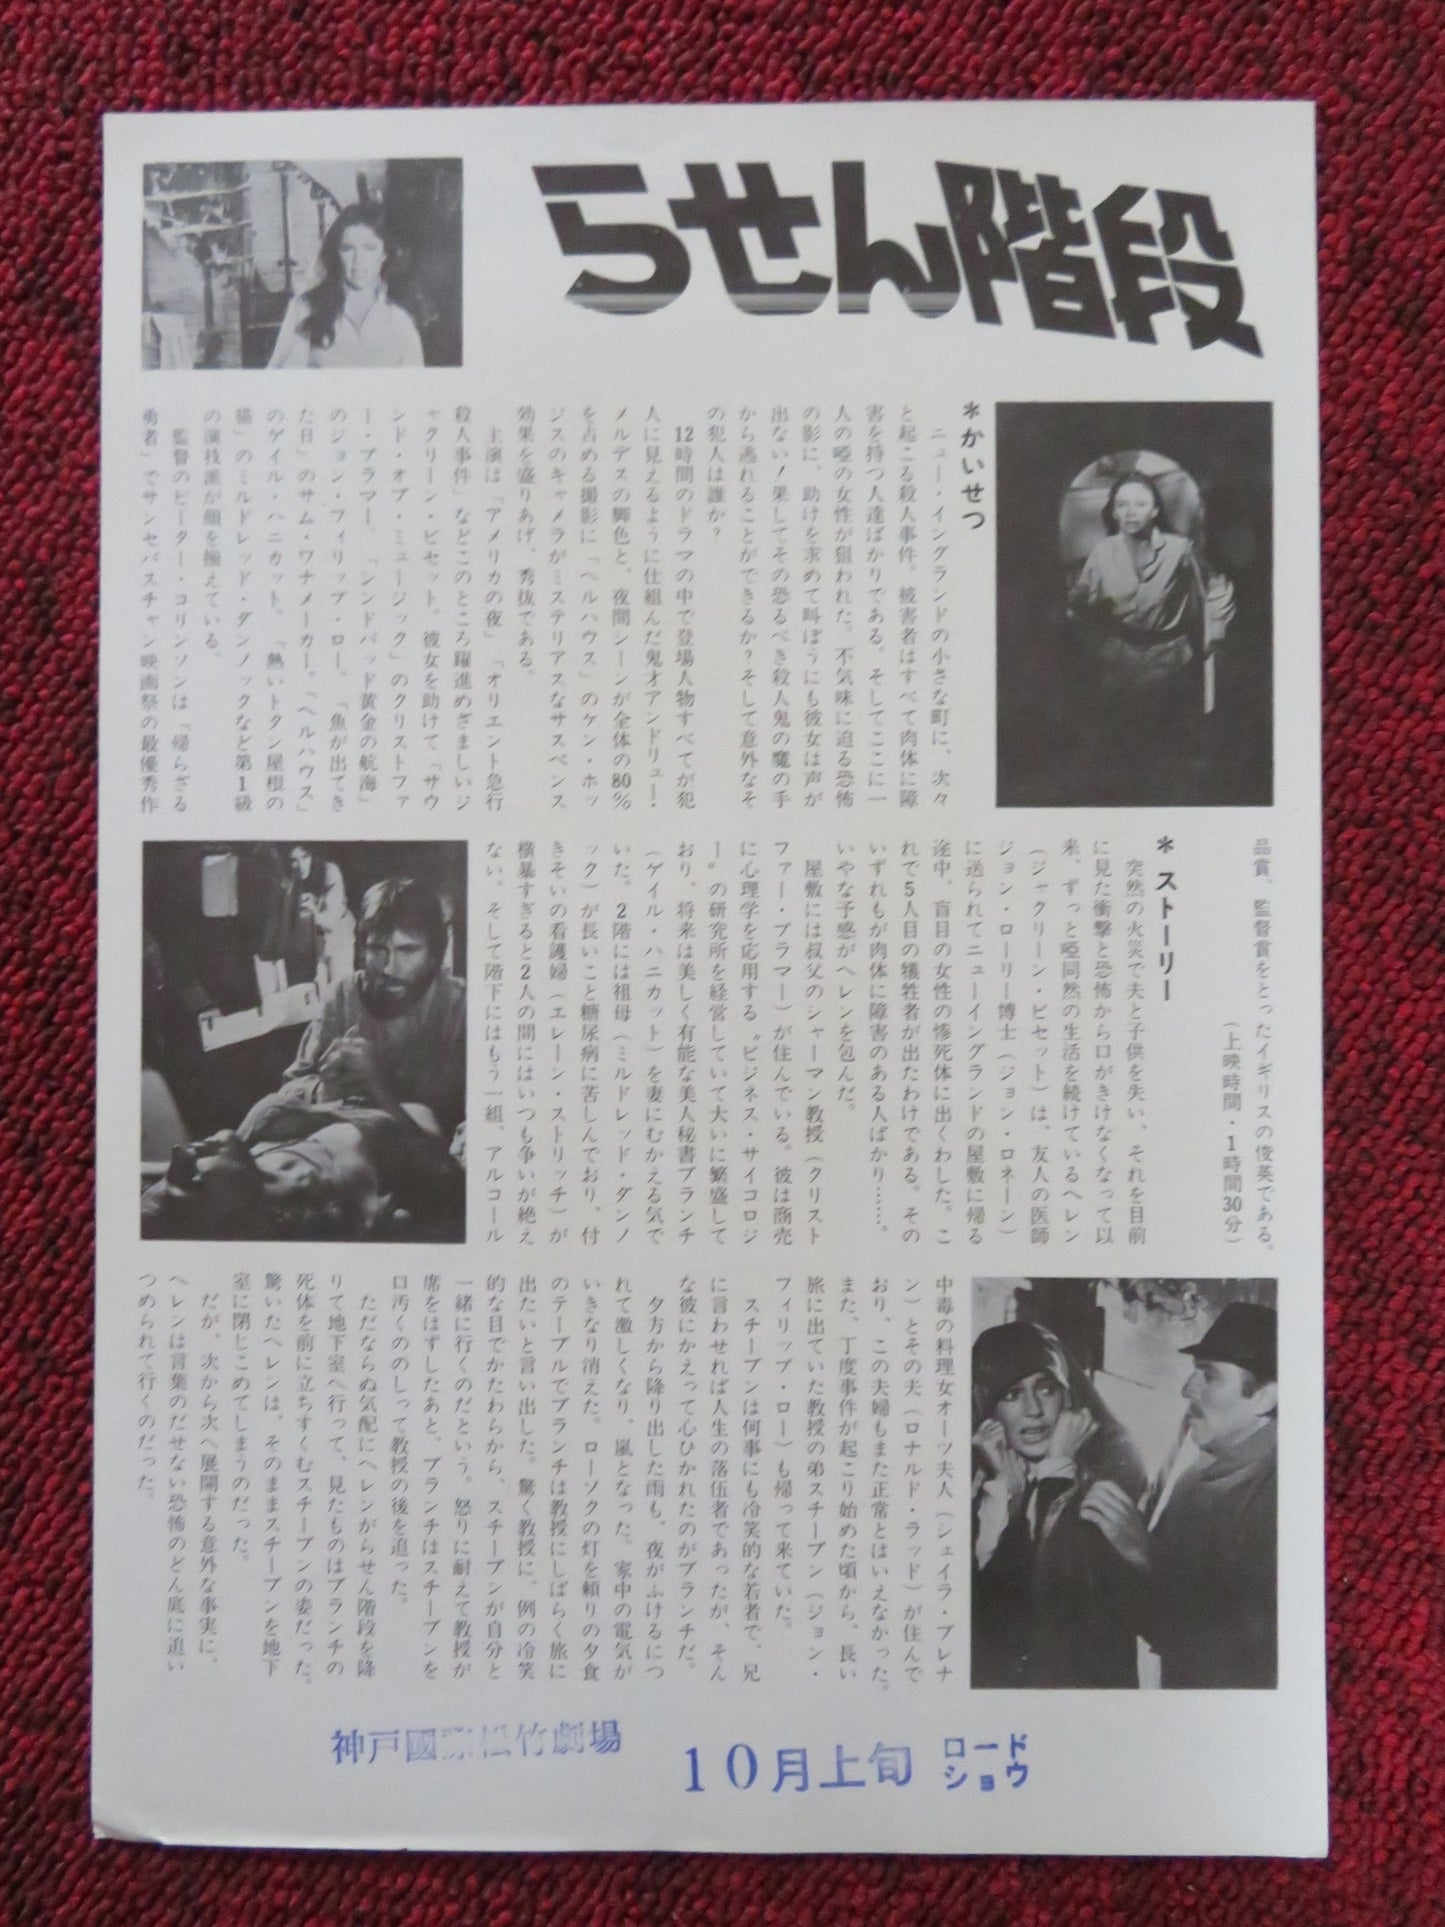 THE SPIRAL STAIRCASE JAPANESE CHIRASHI (B5) POSTER J. BISSET C. PLUMMER 1975